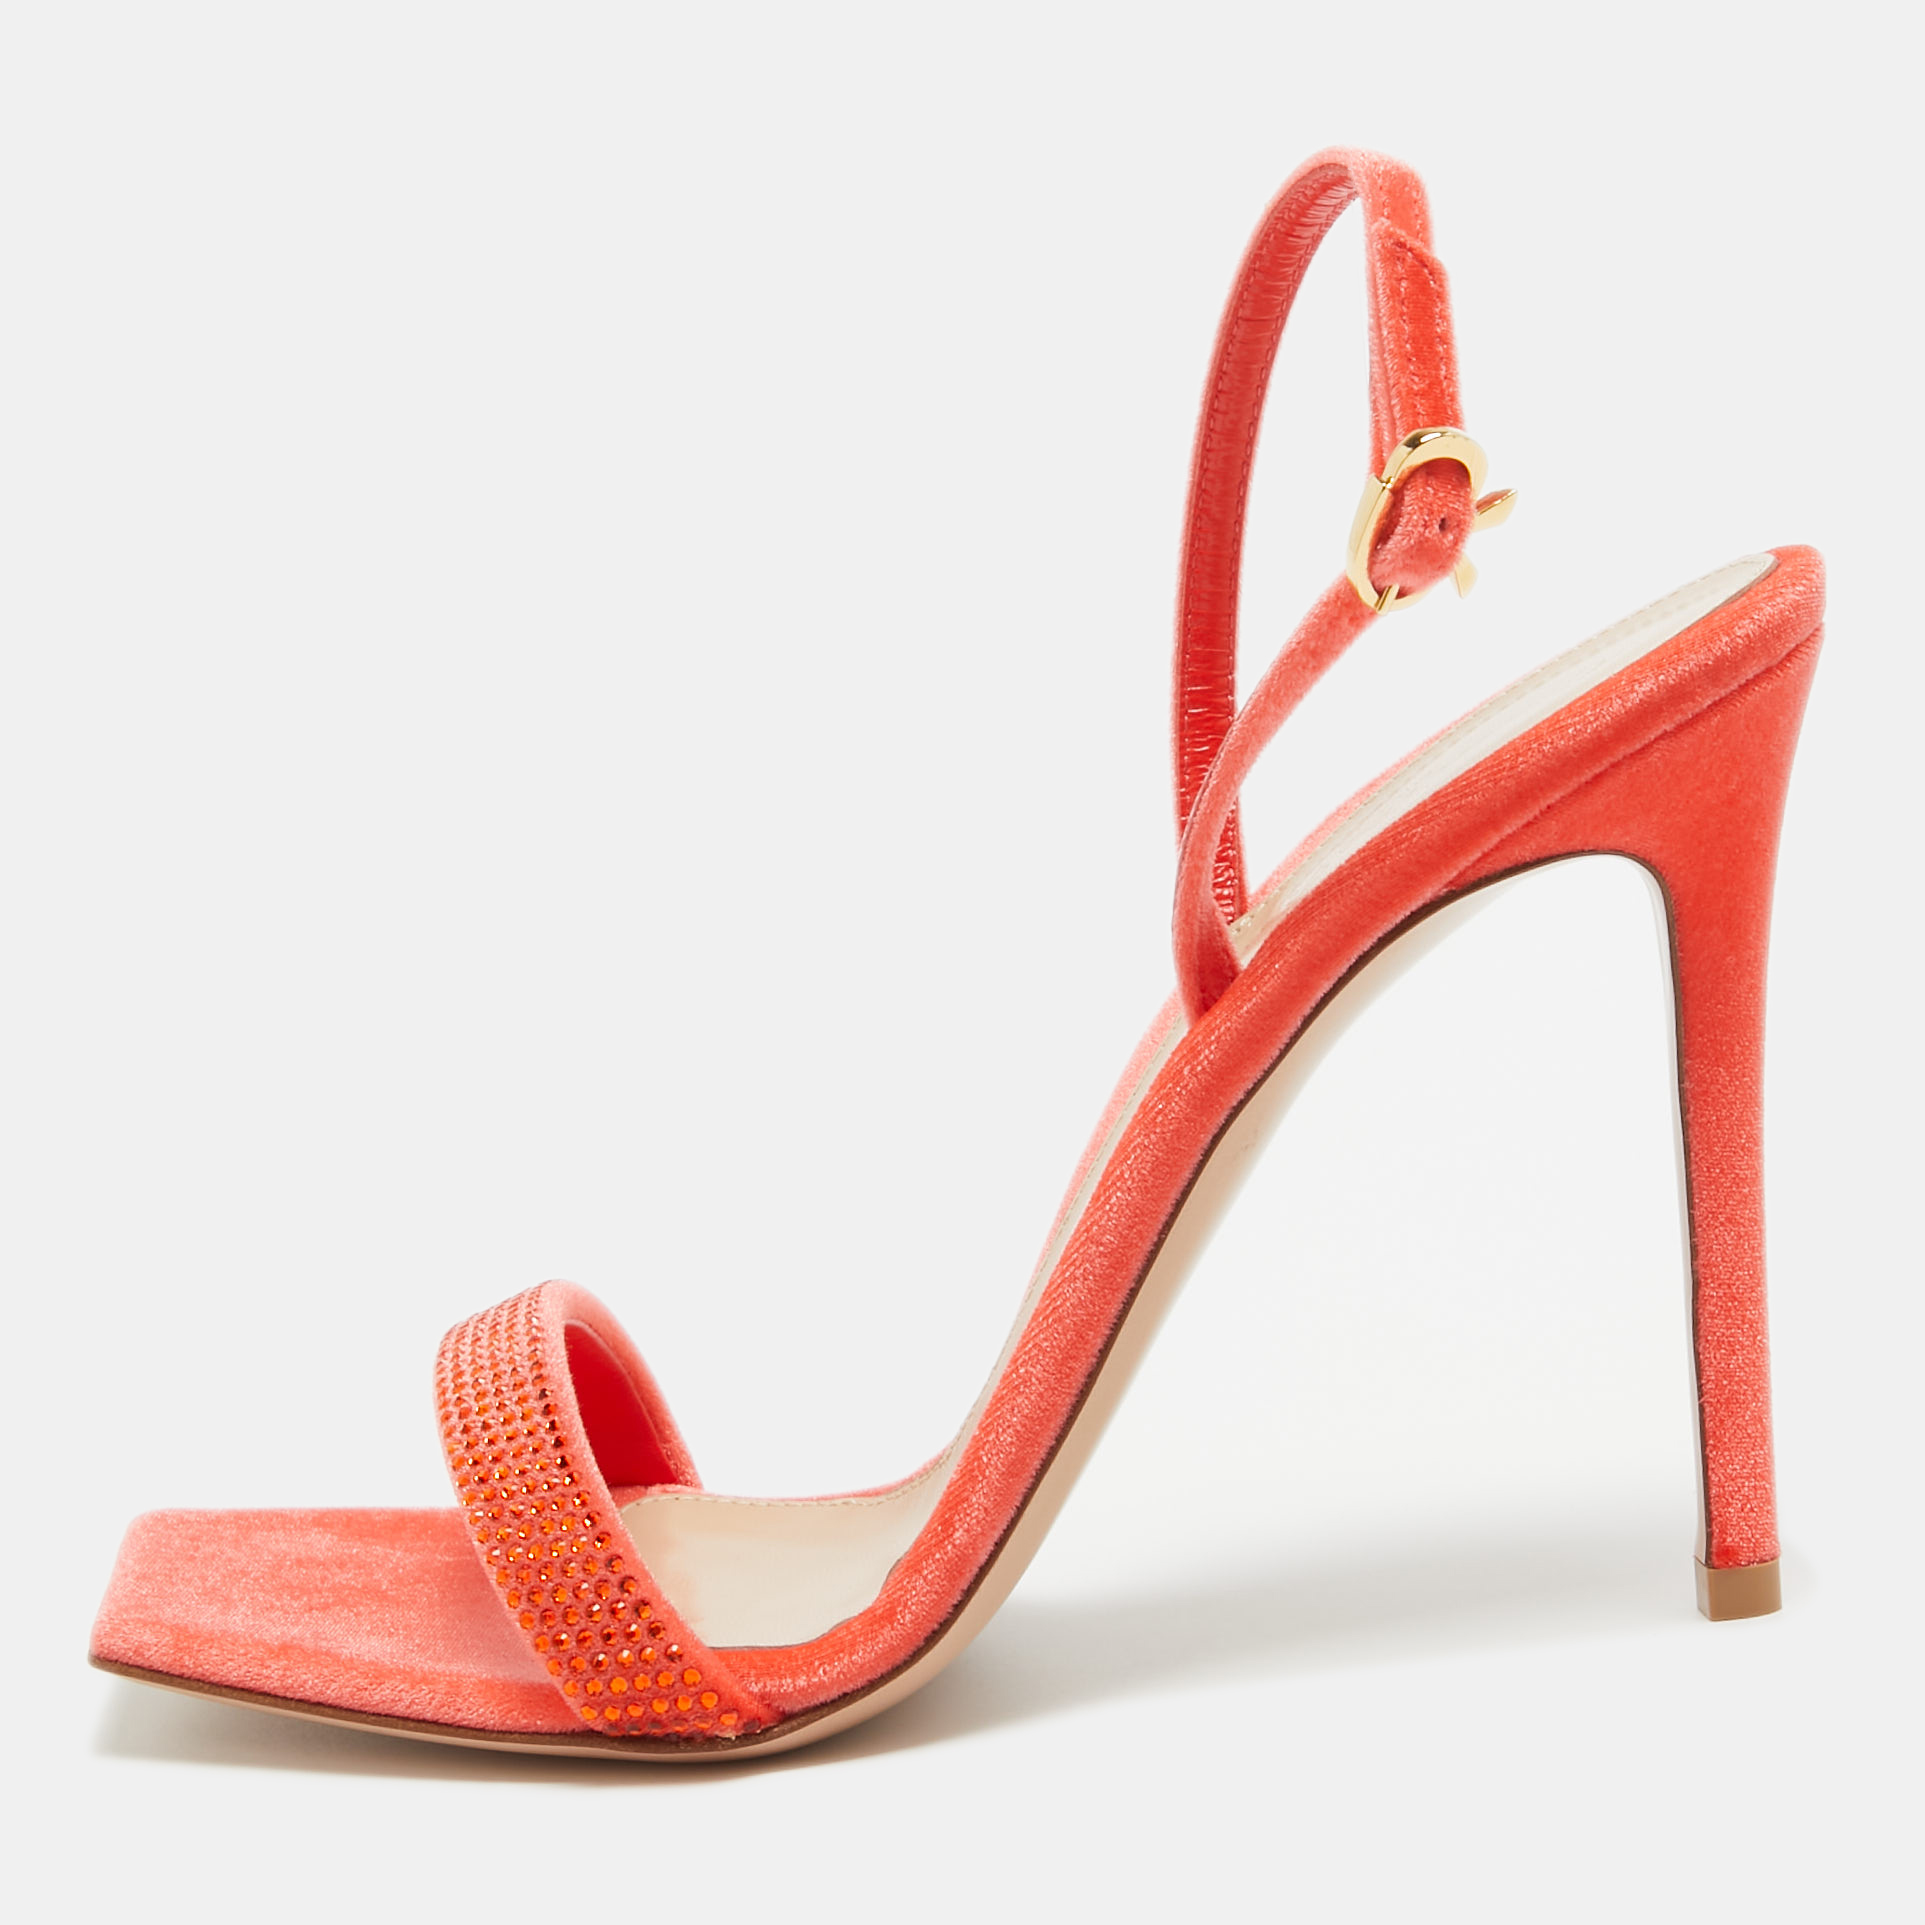 Gianvito rossi poppy red velvet embellished britney sandals size 39